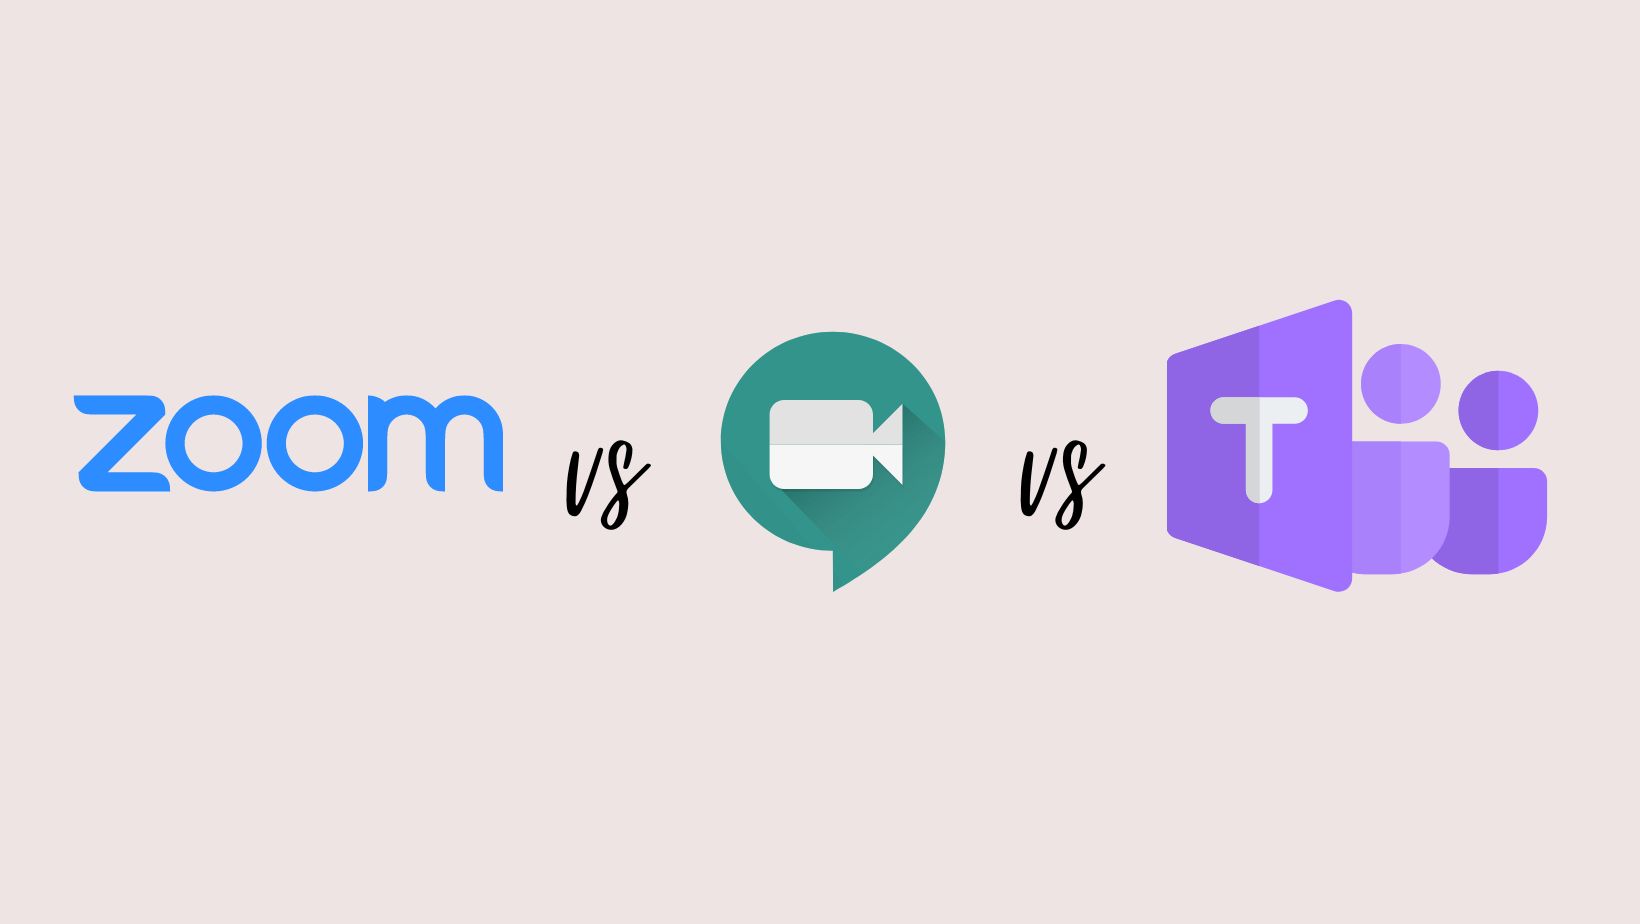 Zoom vs Microsoft Teams vs Google Meet